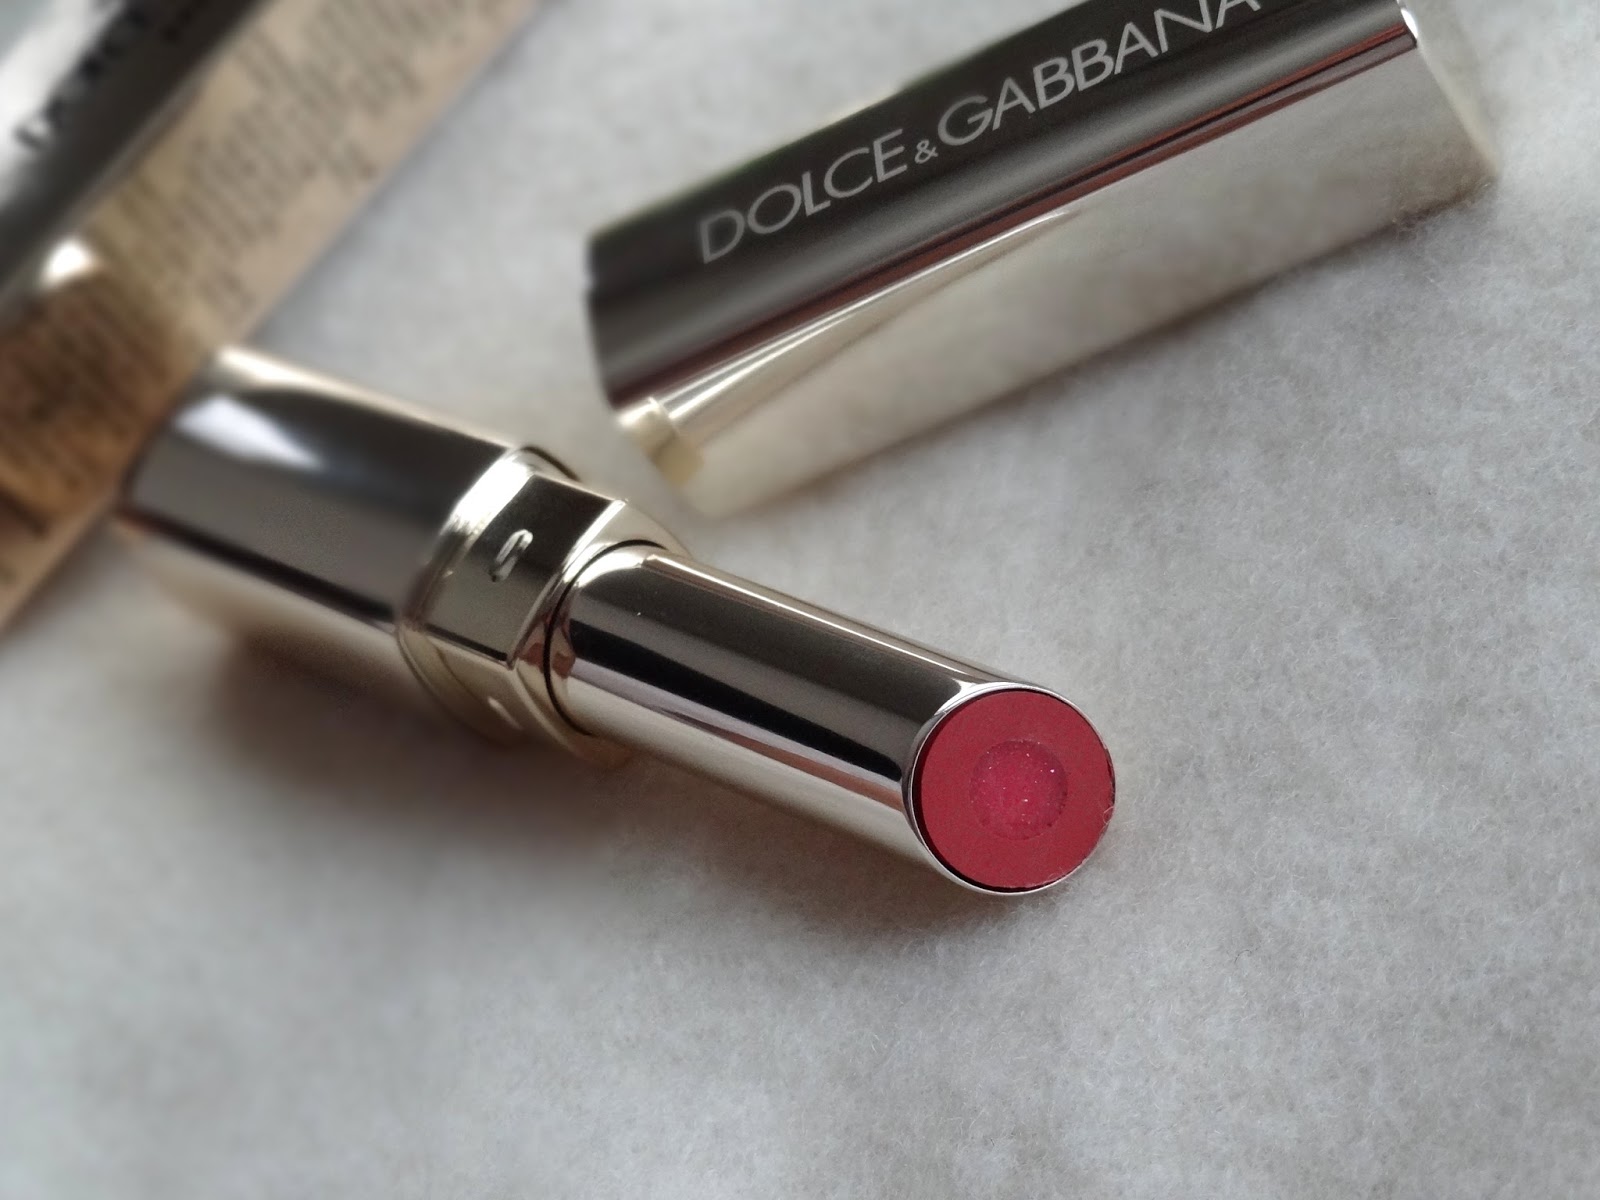 dolce & gabbana passion fusion gloss duo lipstick in 230 iridescent